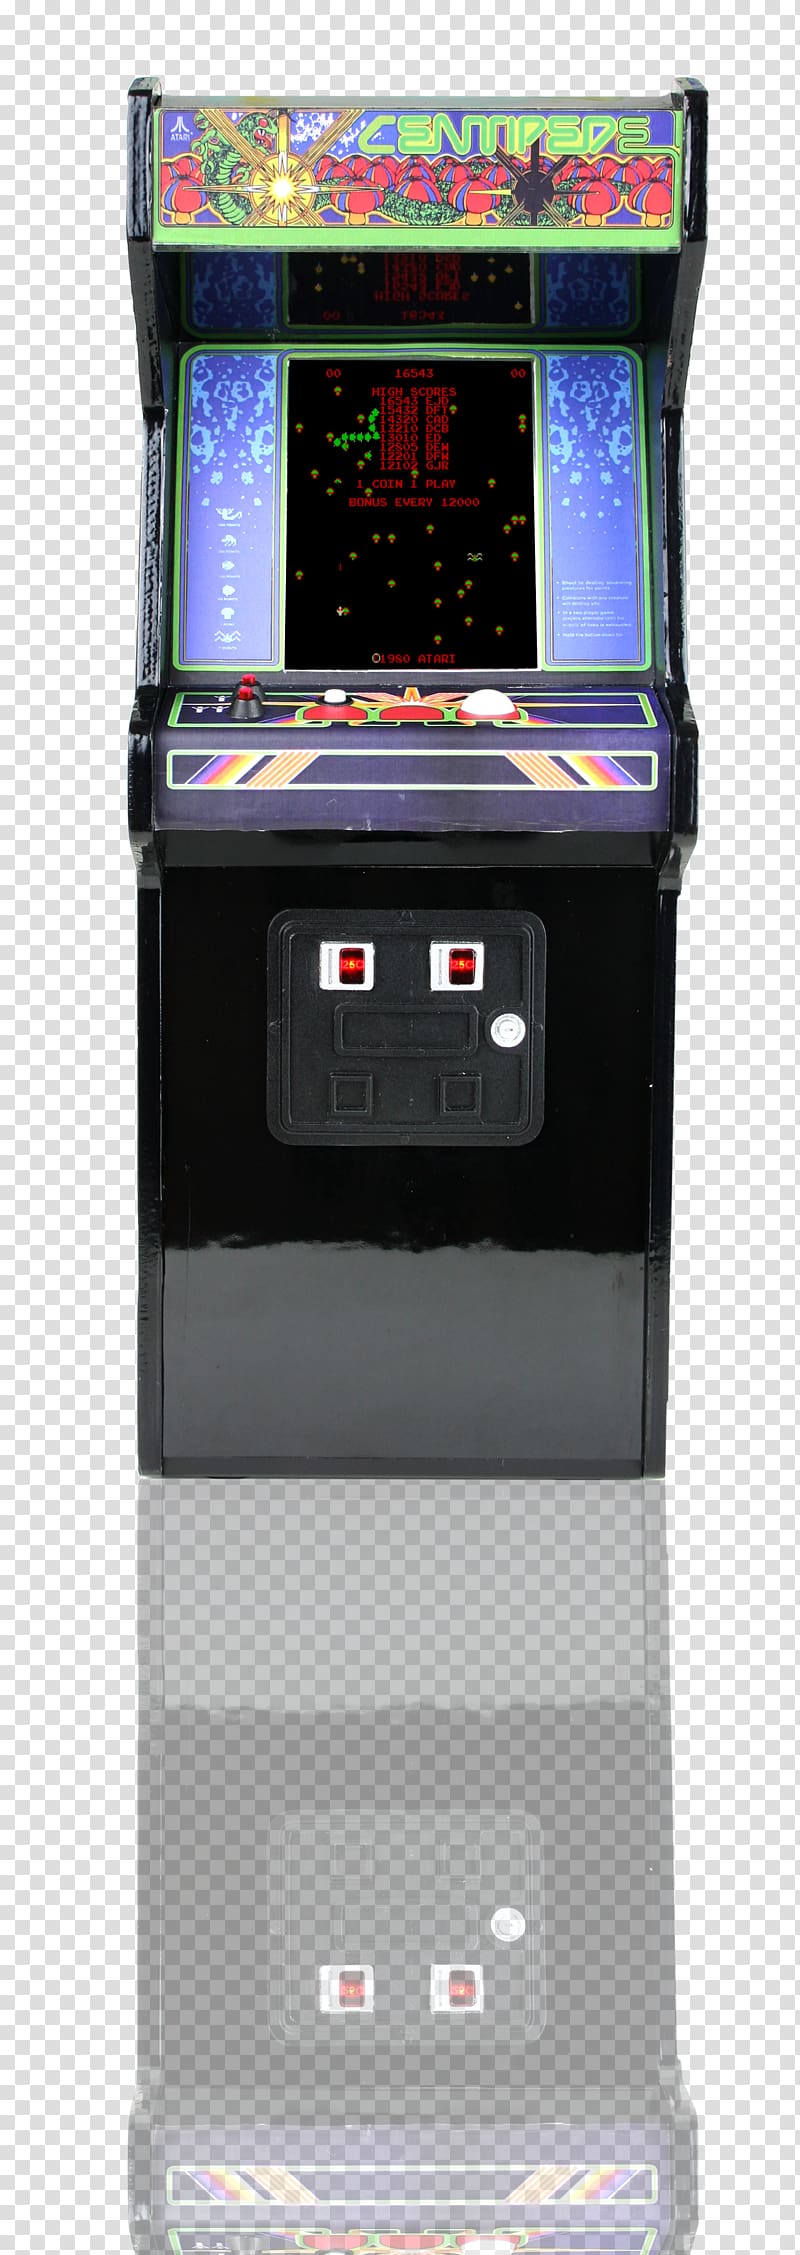 Centipede Arcade game Video game Arcade cabinet Retrogaming, arcade transparent background PNG clipart